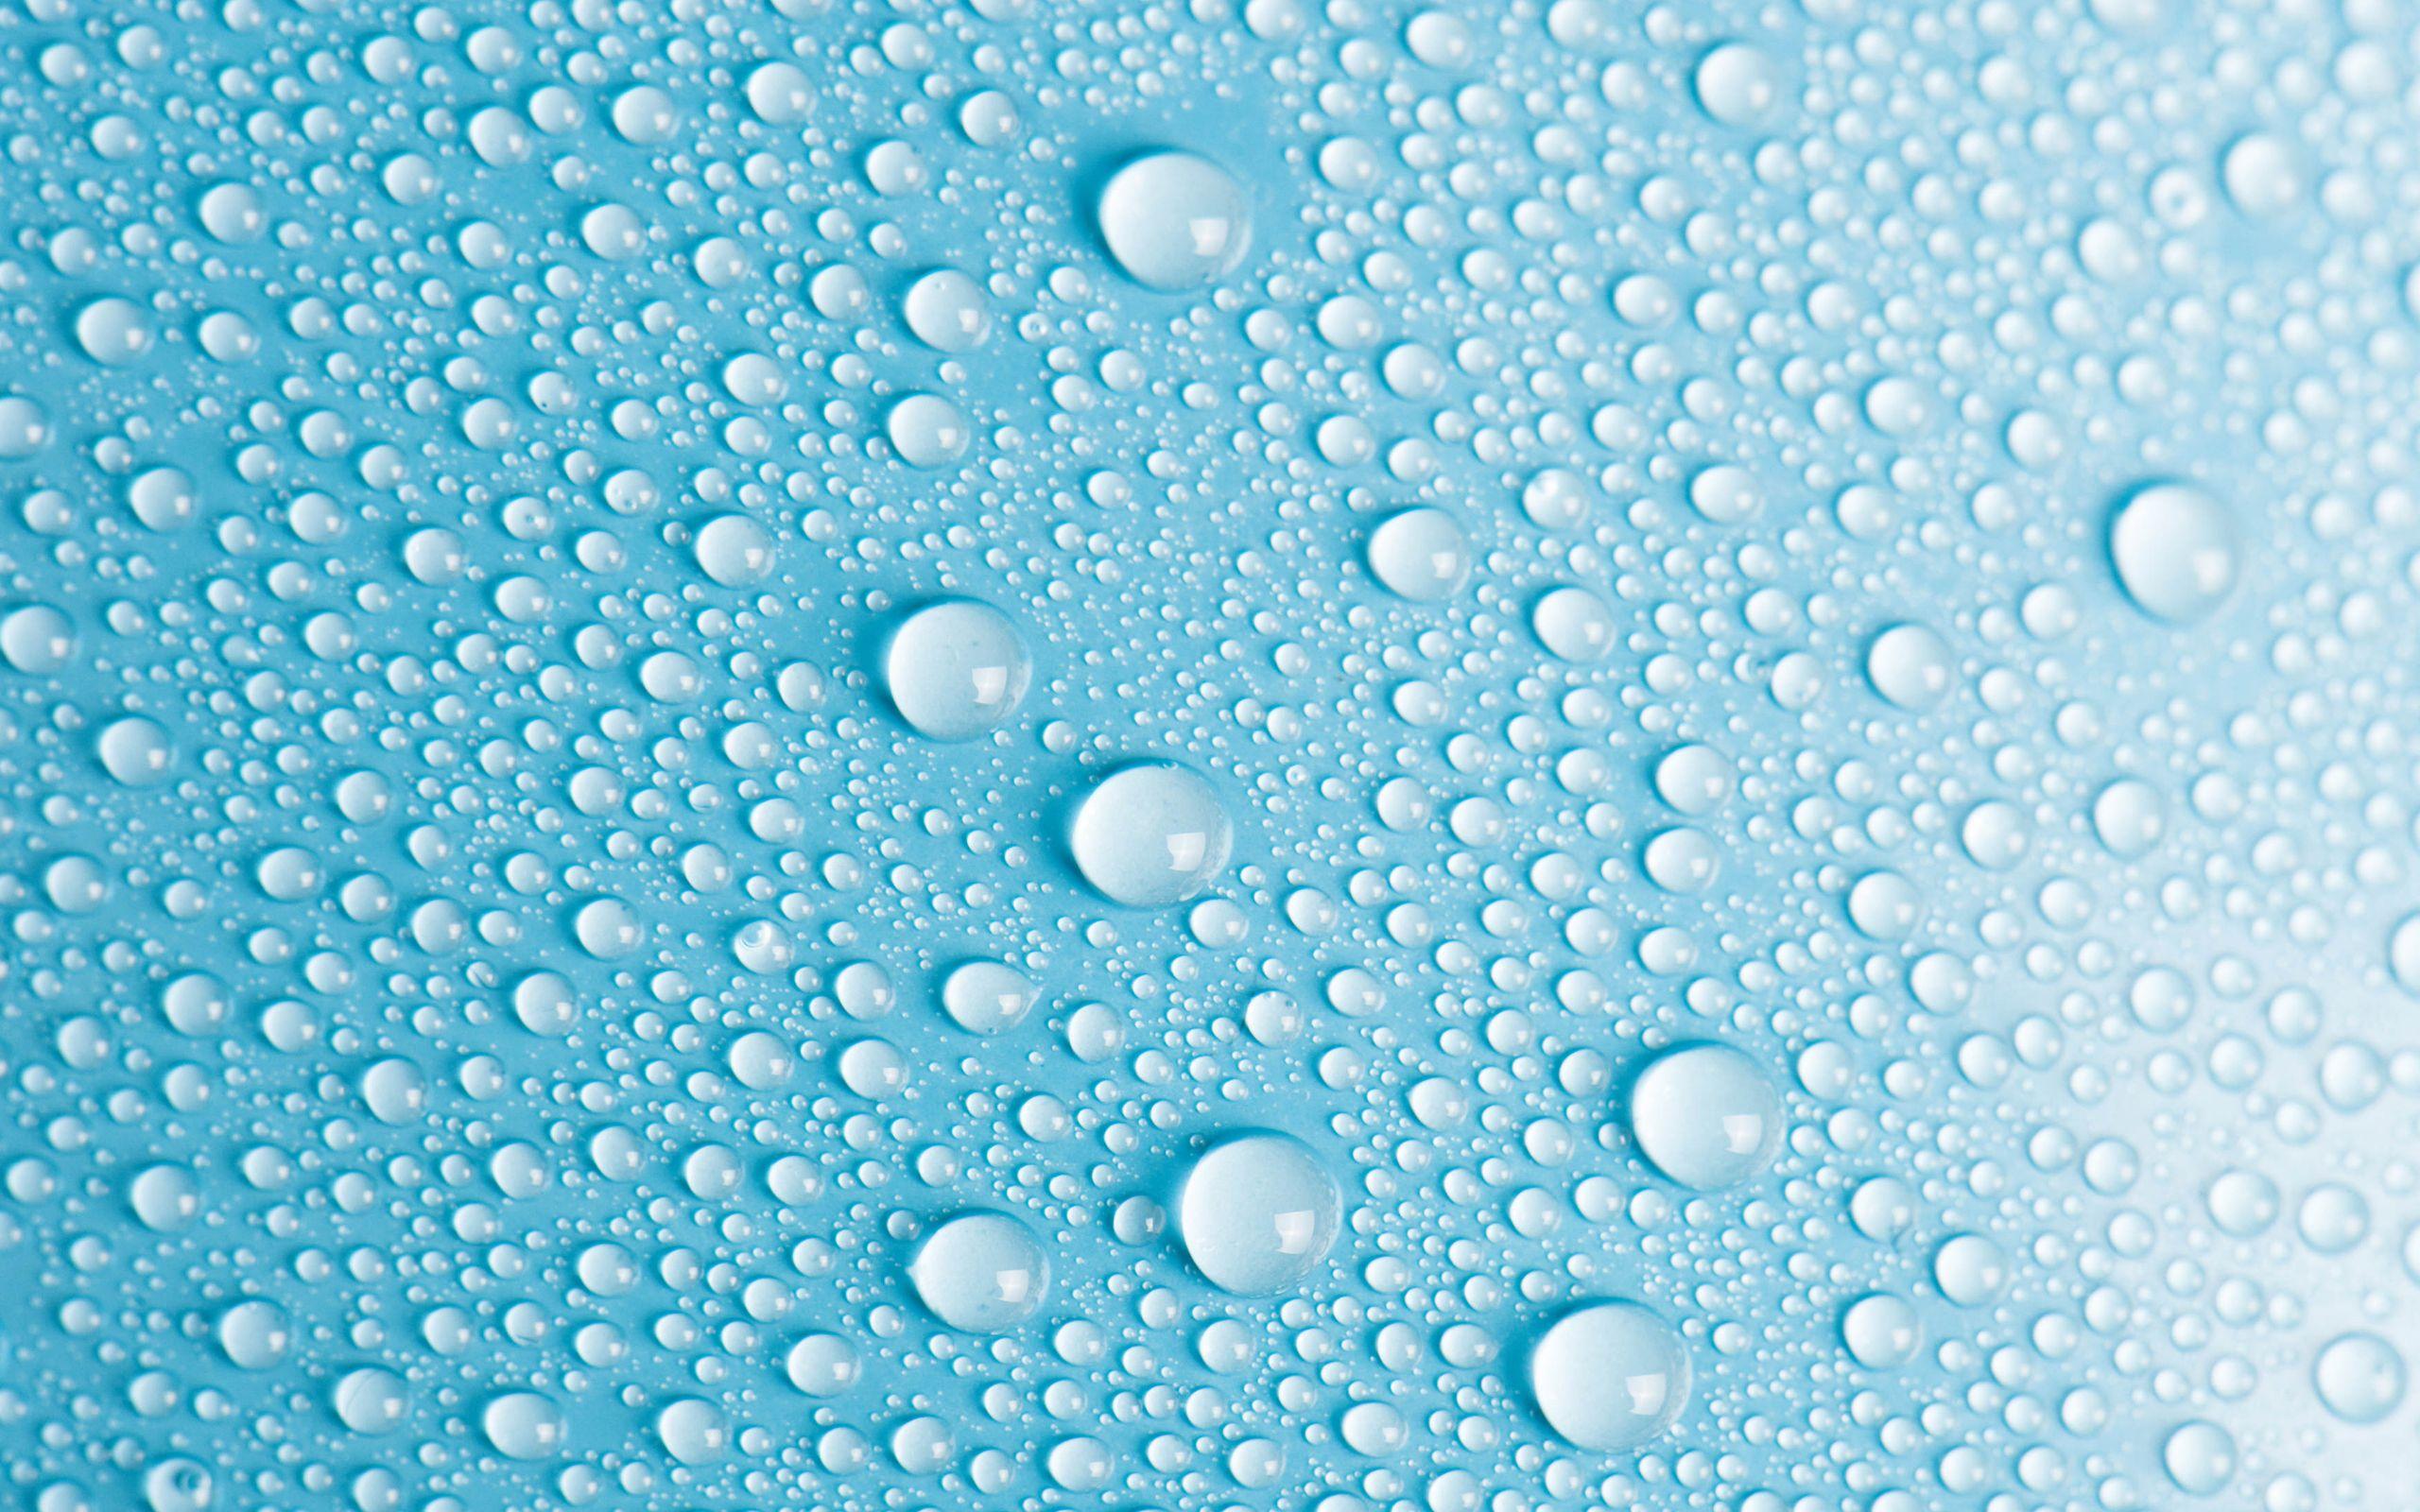 Water Drop Wallpaper 26143 2560x1600 px